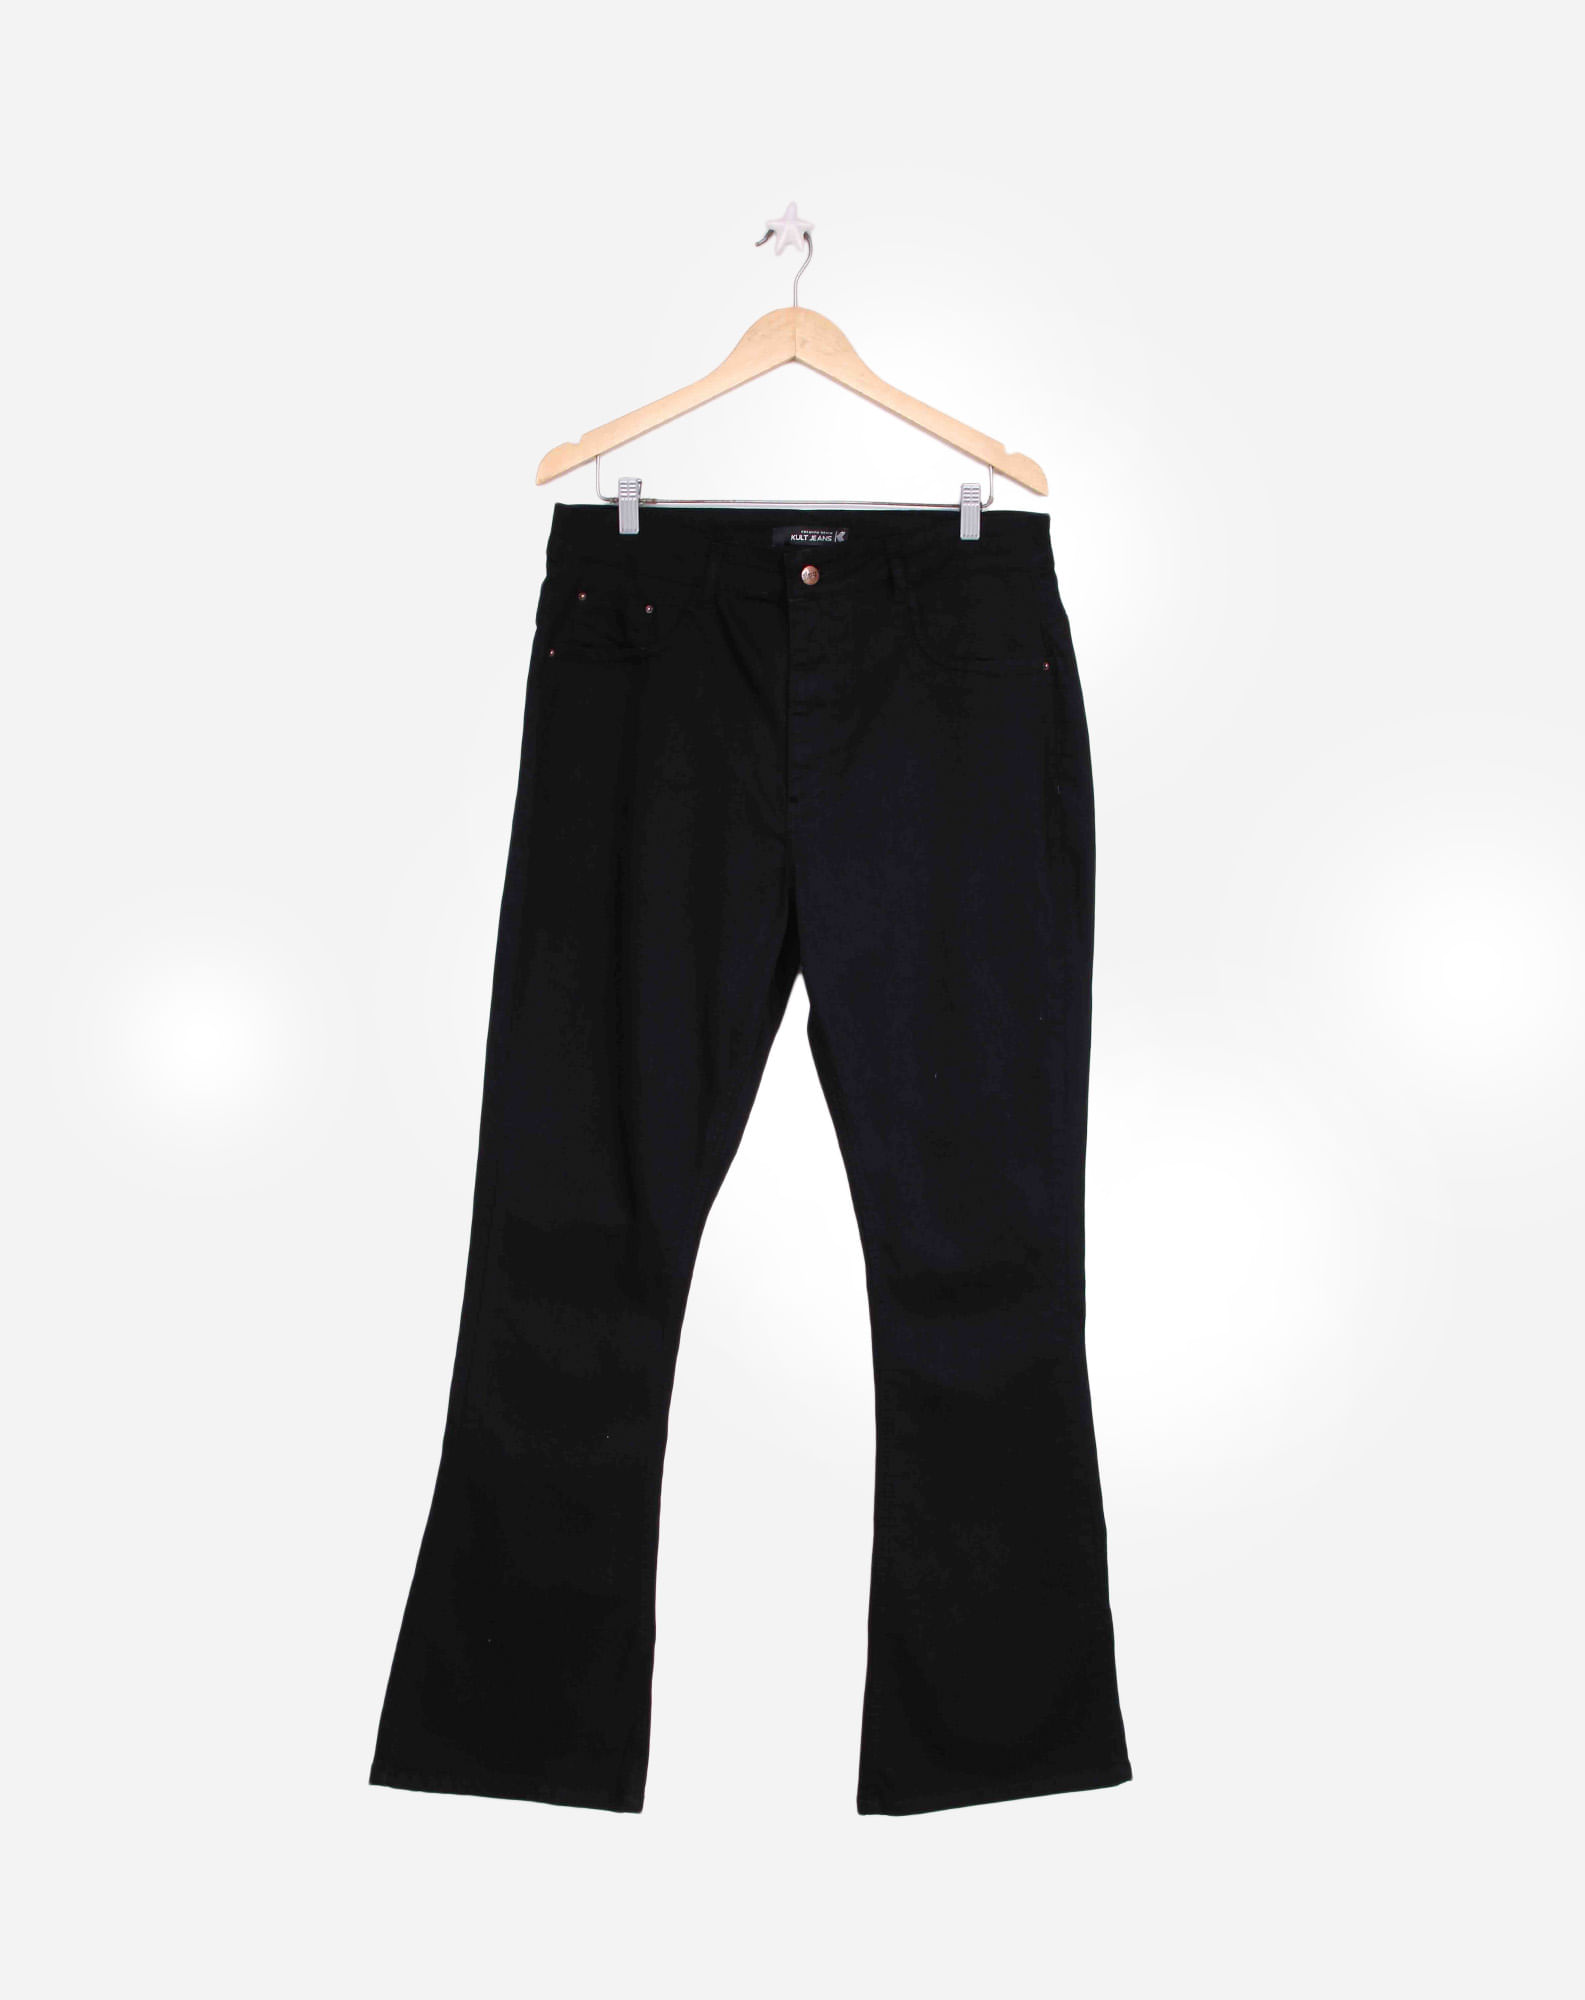 702841001 calça jeans black plus size feminina boot cut jeans black 46 44b